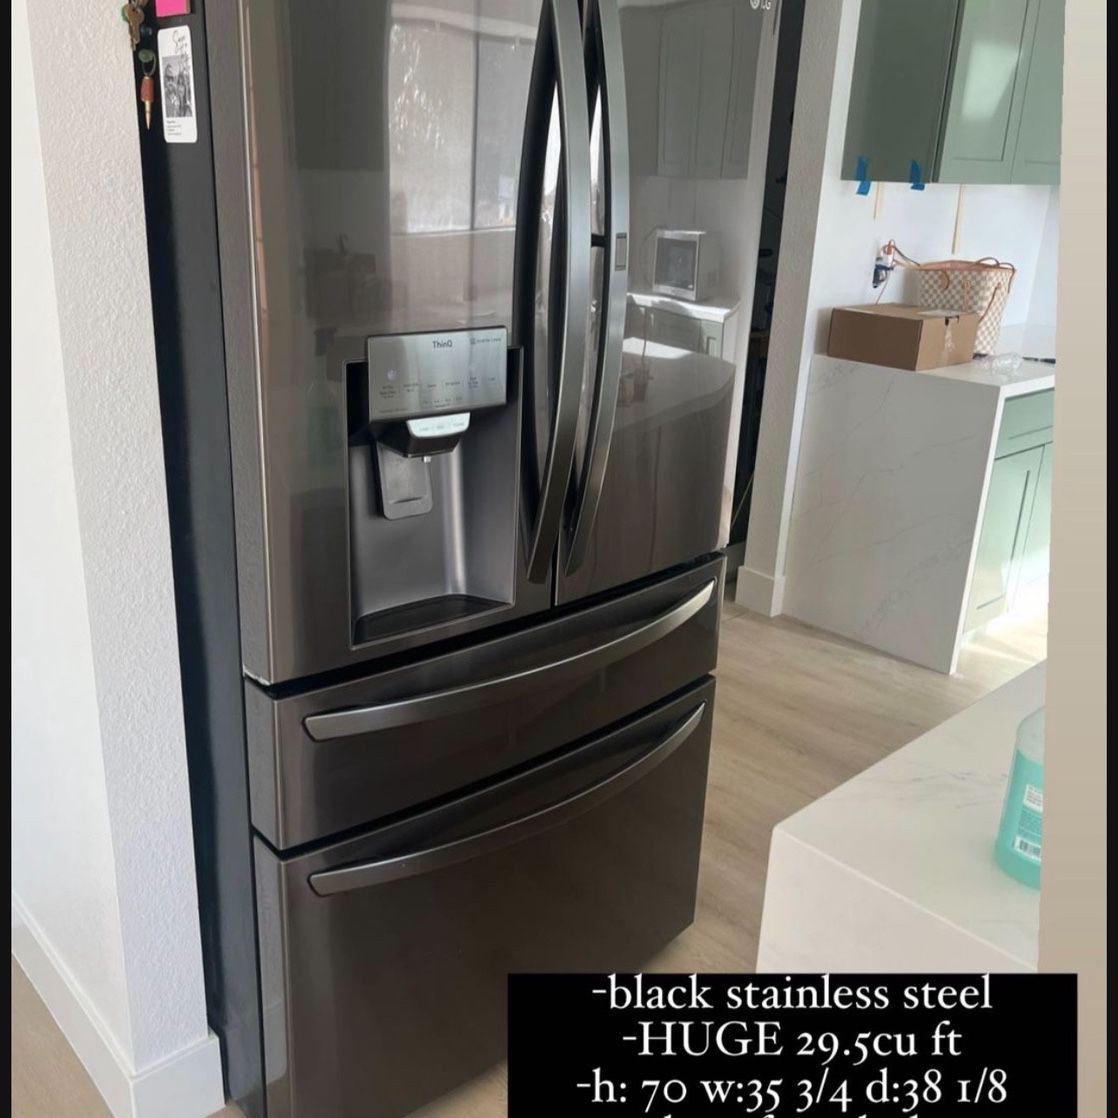 LG Black Stainless Steel Refrigerator 